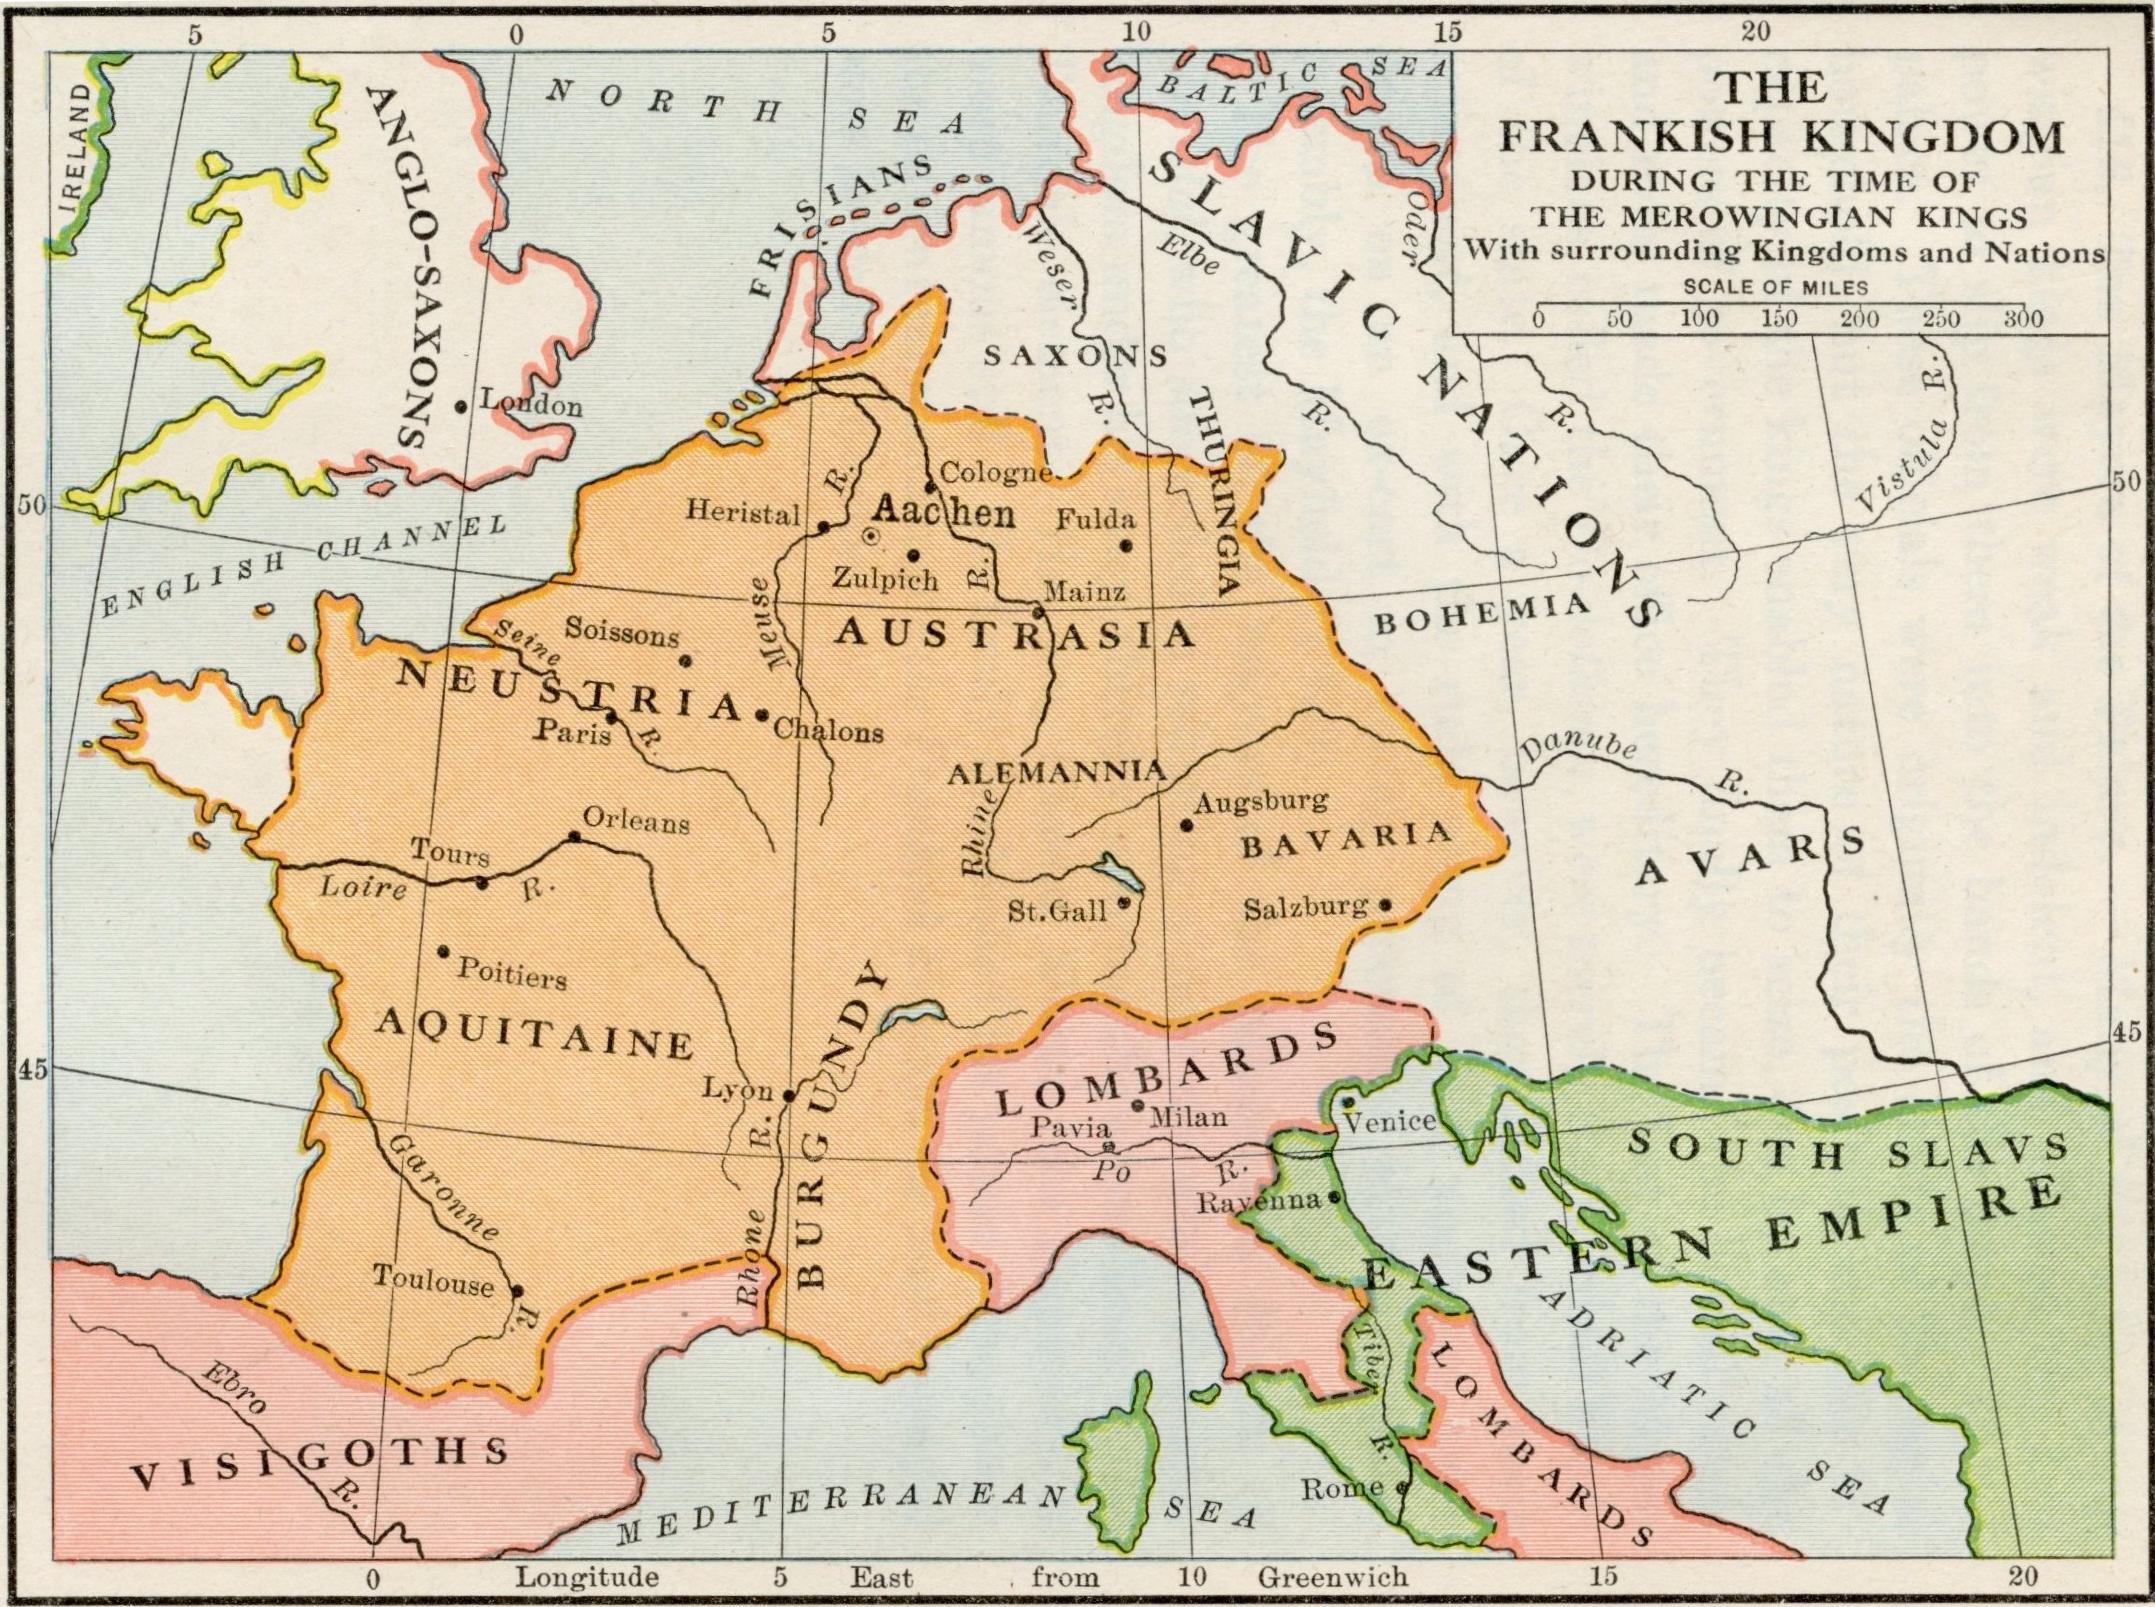 The Frankish Kingdom